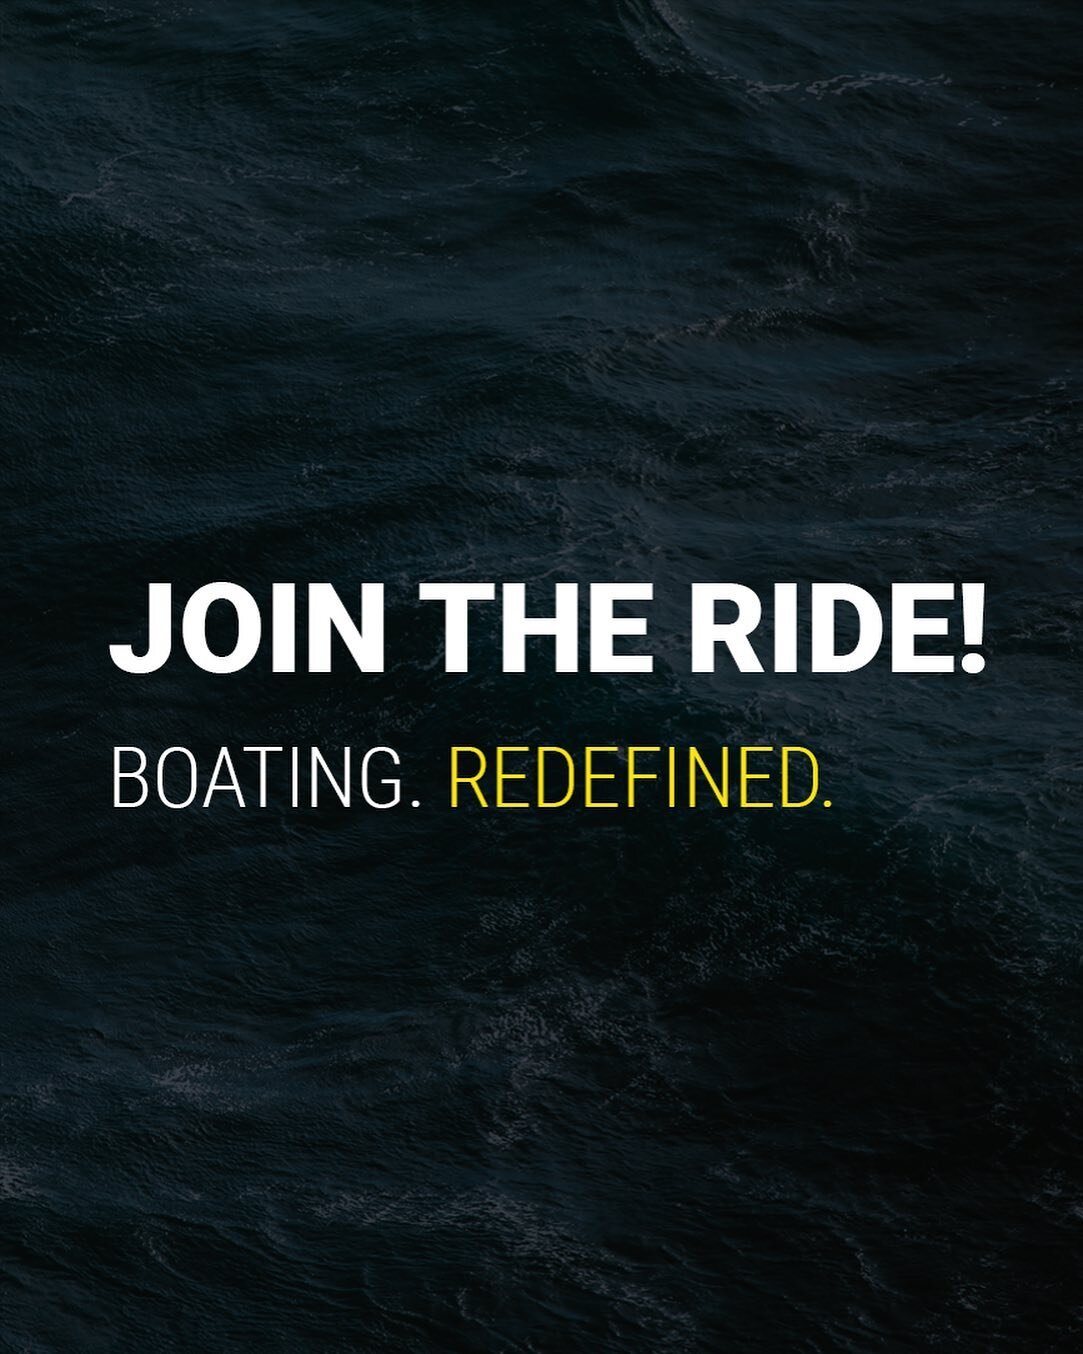 Welcome to 
JOIN THE RIDE!
#Parexo #boating #saltlife #ocean #fun #speedboat #racing #mercury